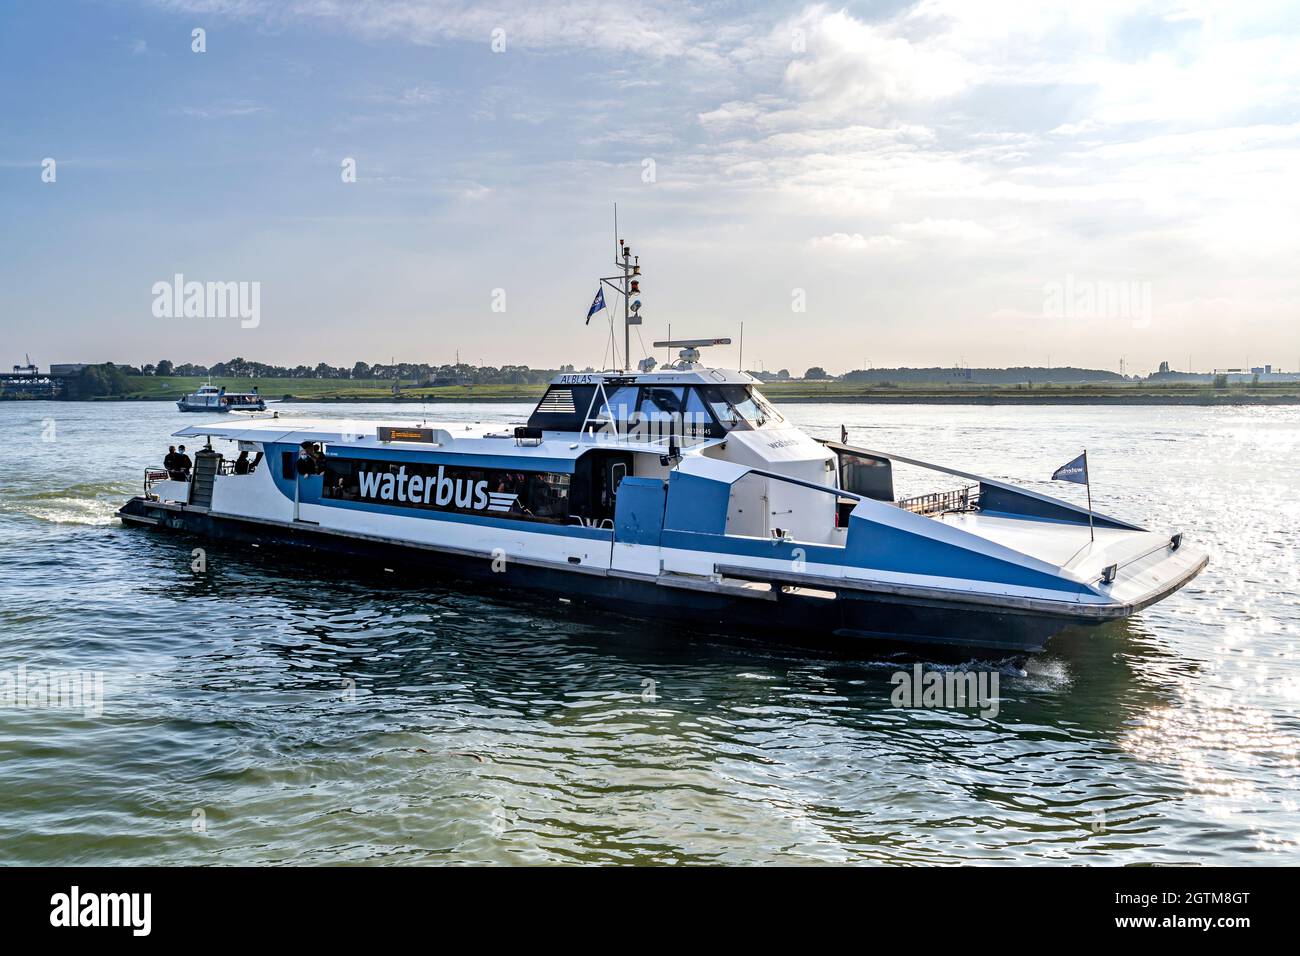 Waterbus fast ferry ALBLAS on the river Noord Stock Photo